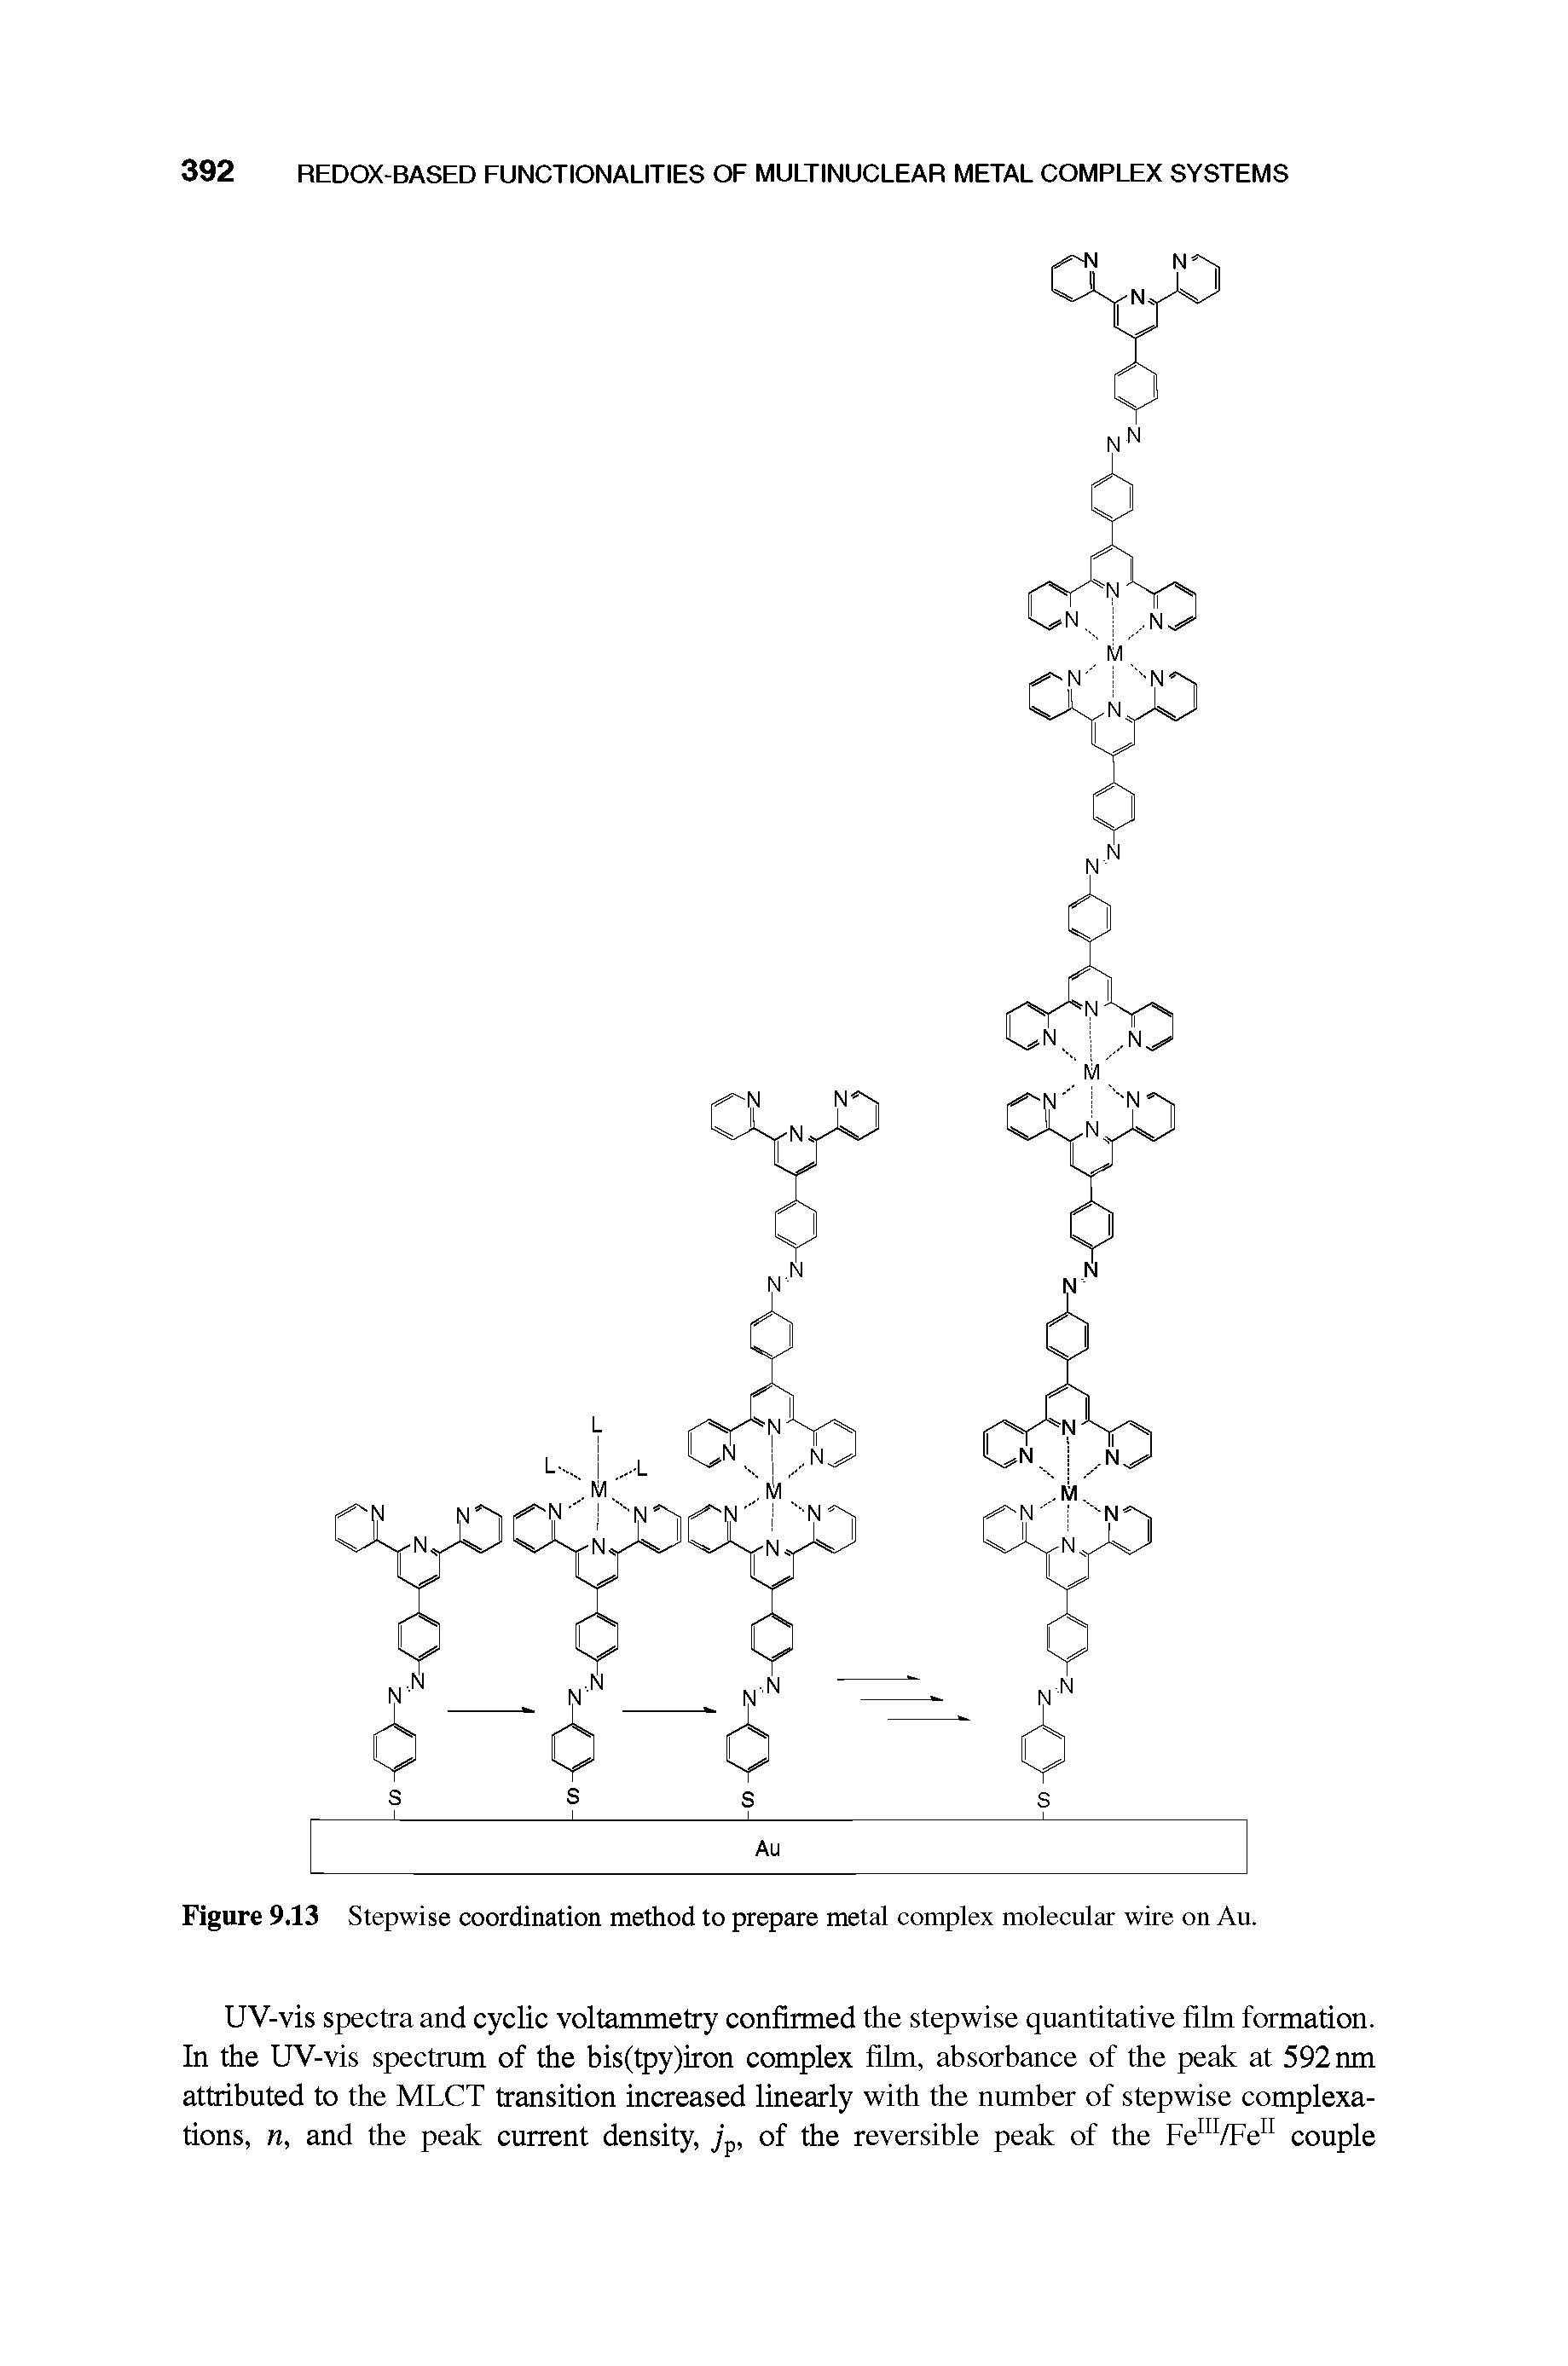 Figure 9.13 Stepwise coordination method to prepare metal complex molecular wire on Au.